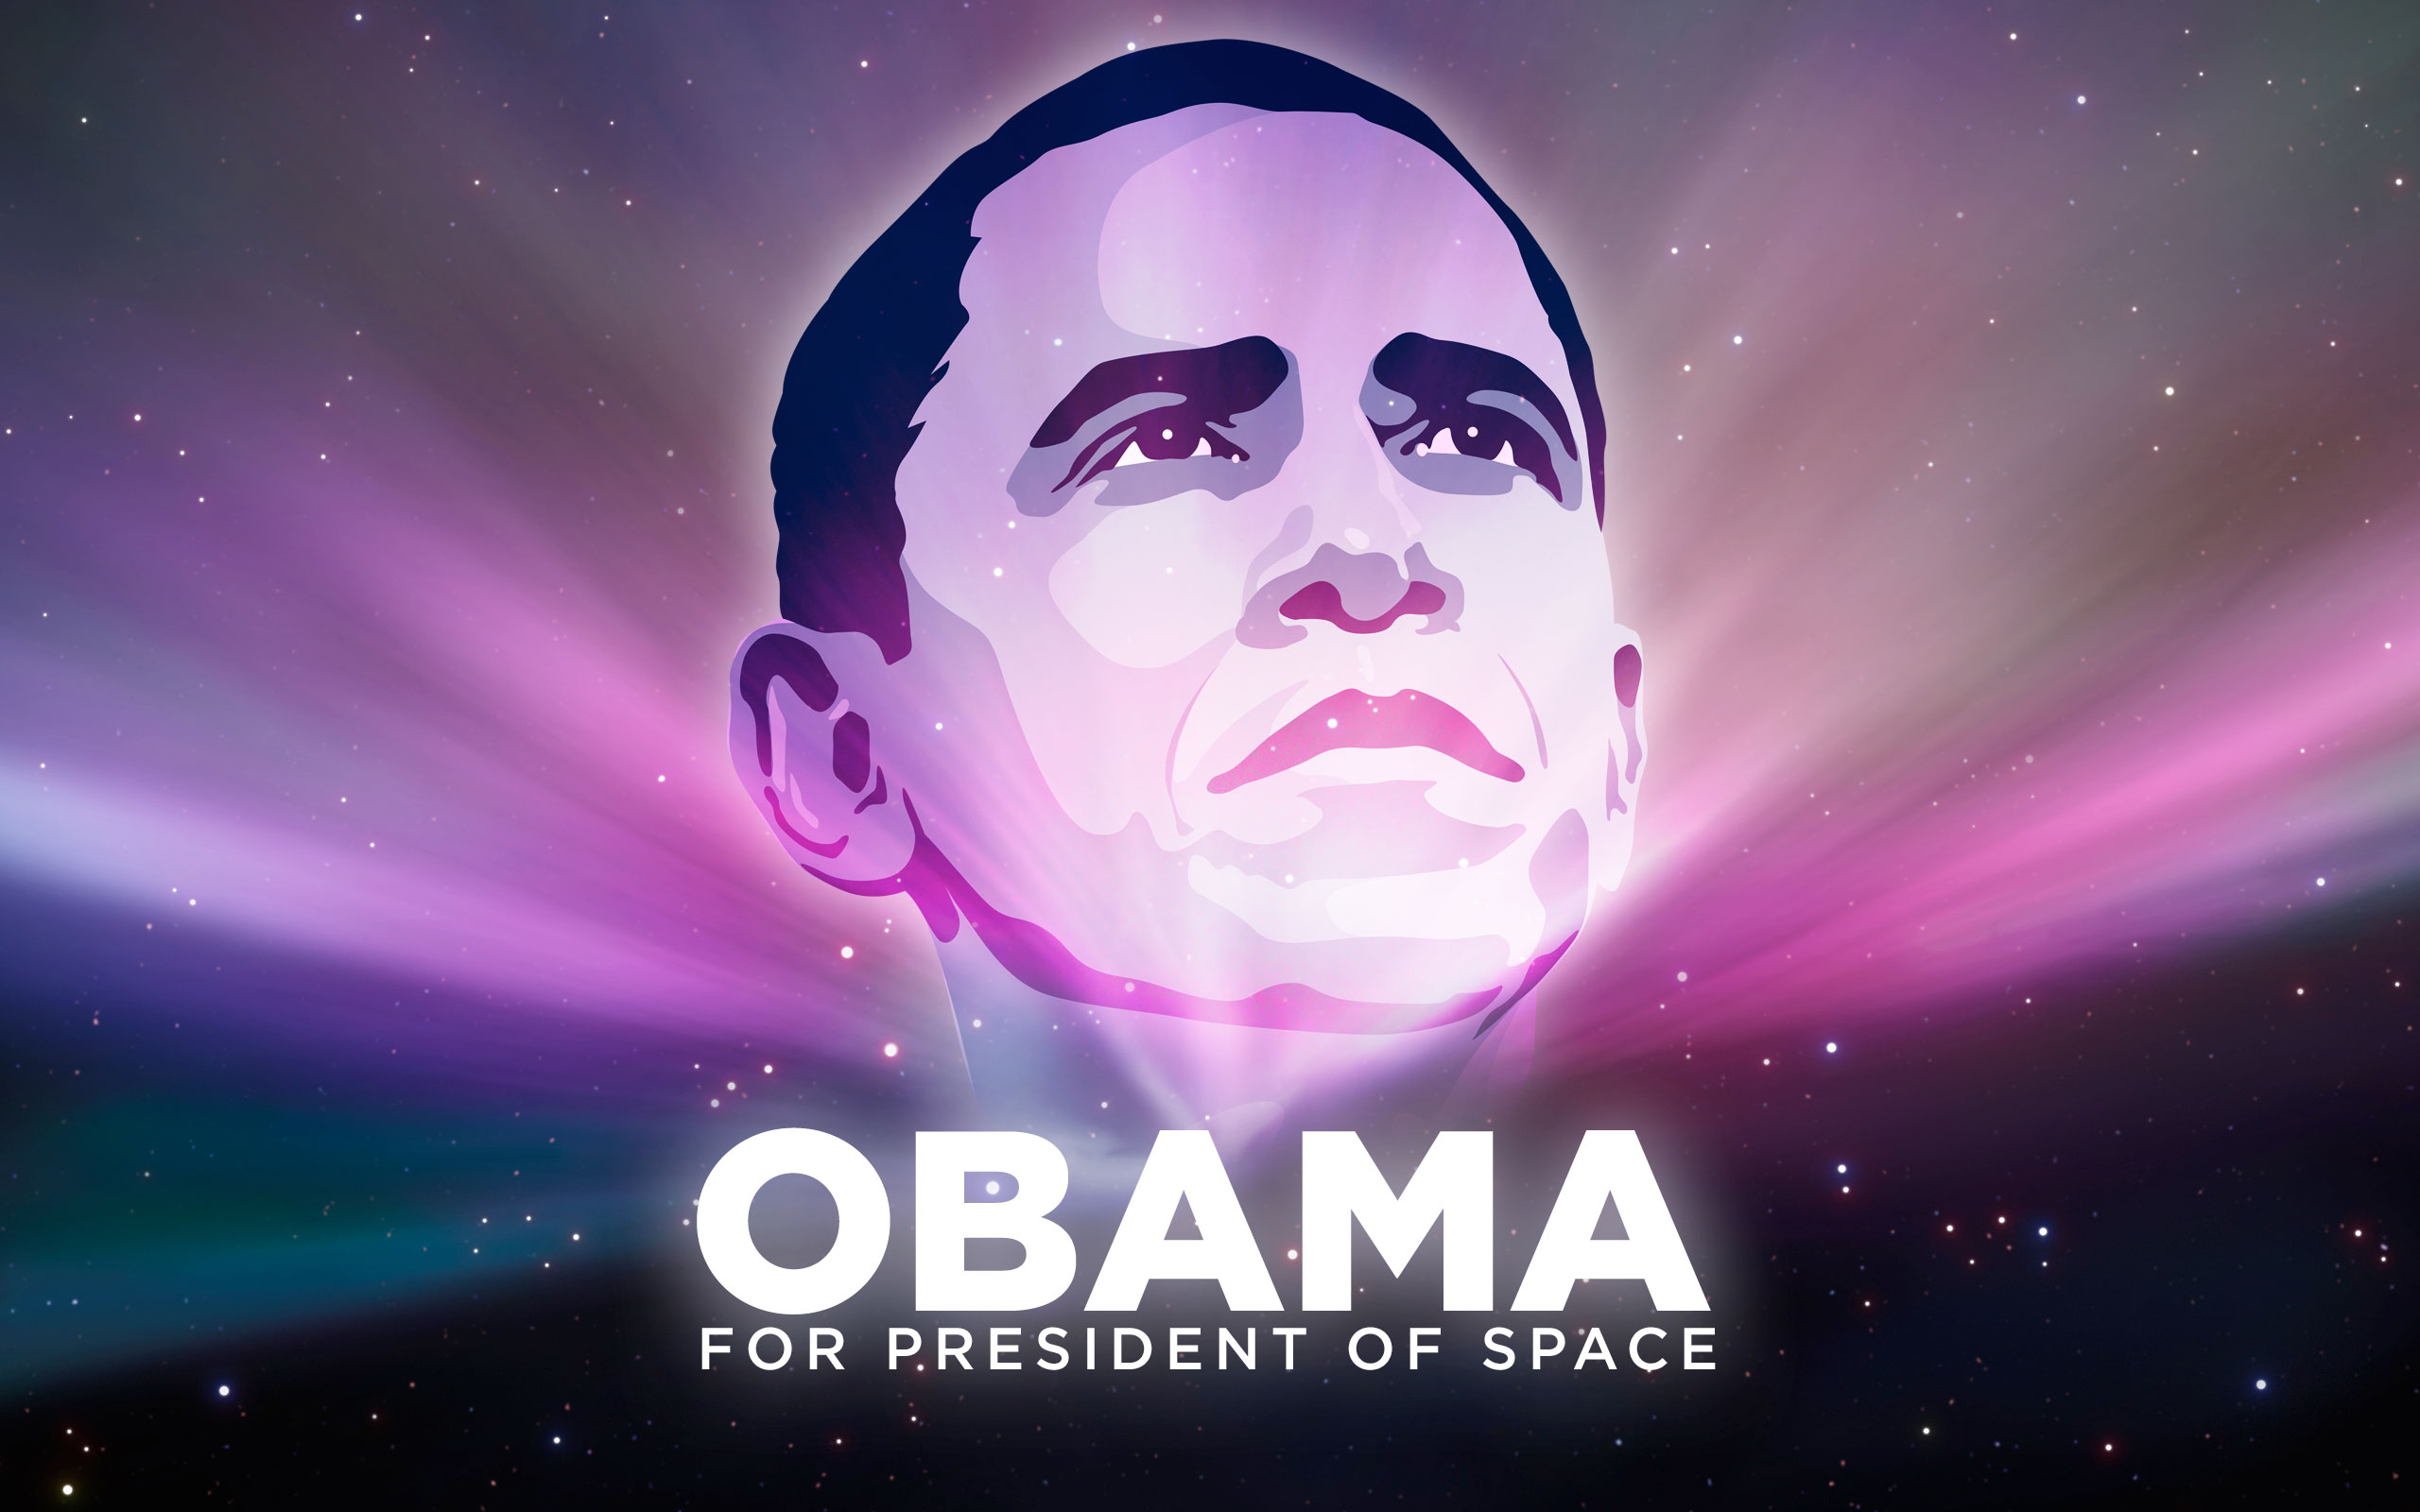 Barack Obama U S President Wallpaper And Image